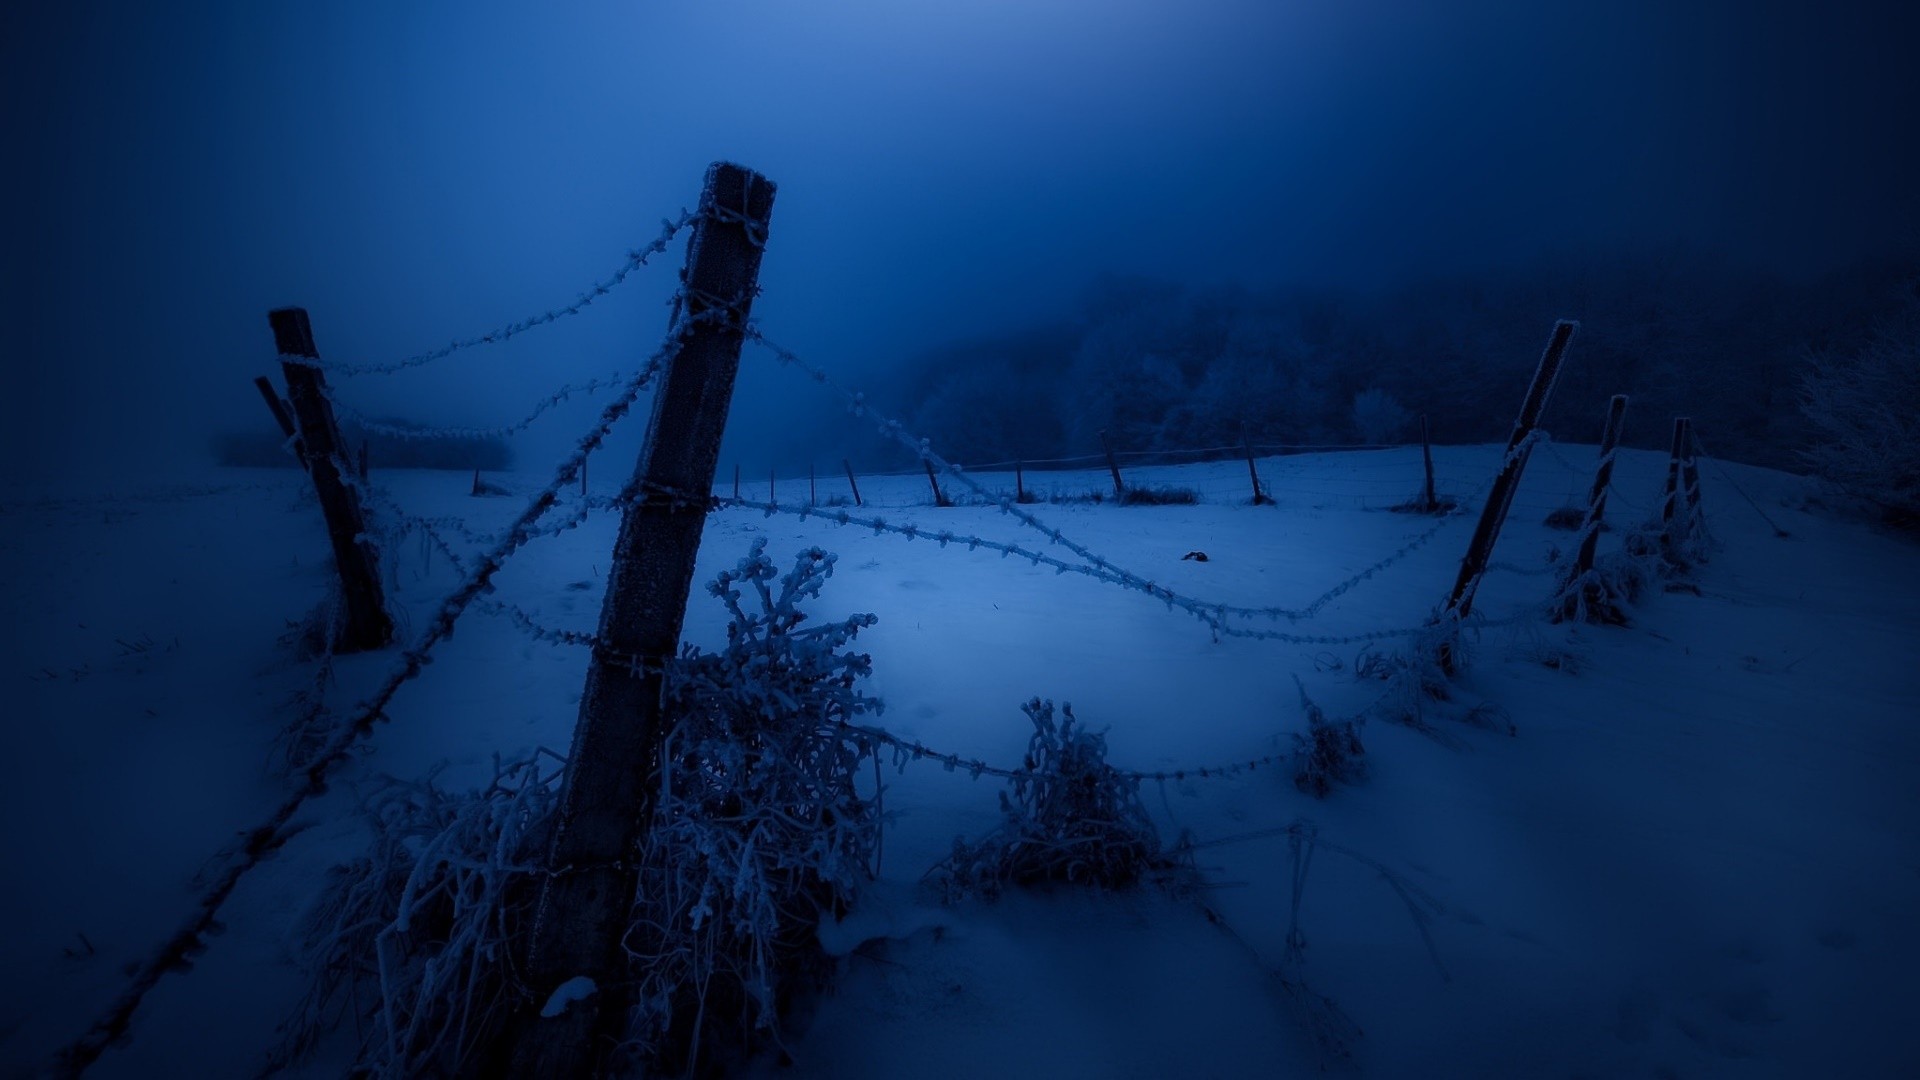 General 1920x1080 dark night fence cold snow winter landscape barbed wire blue